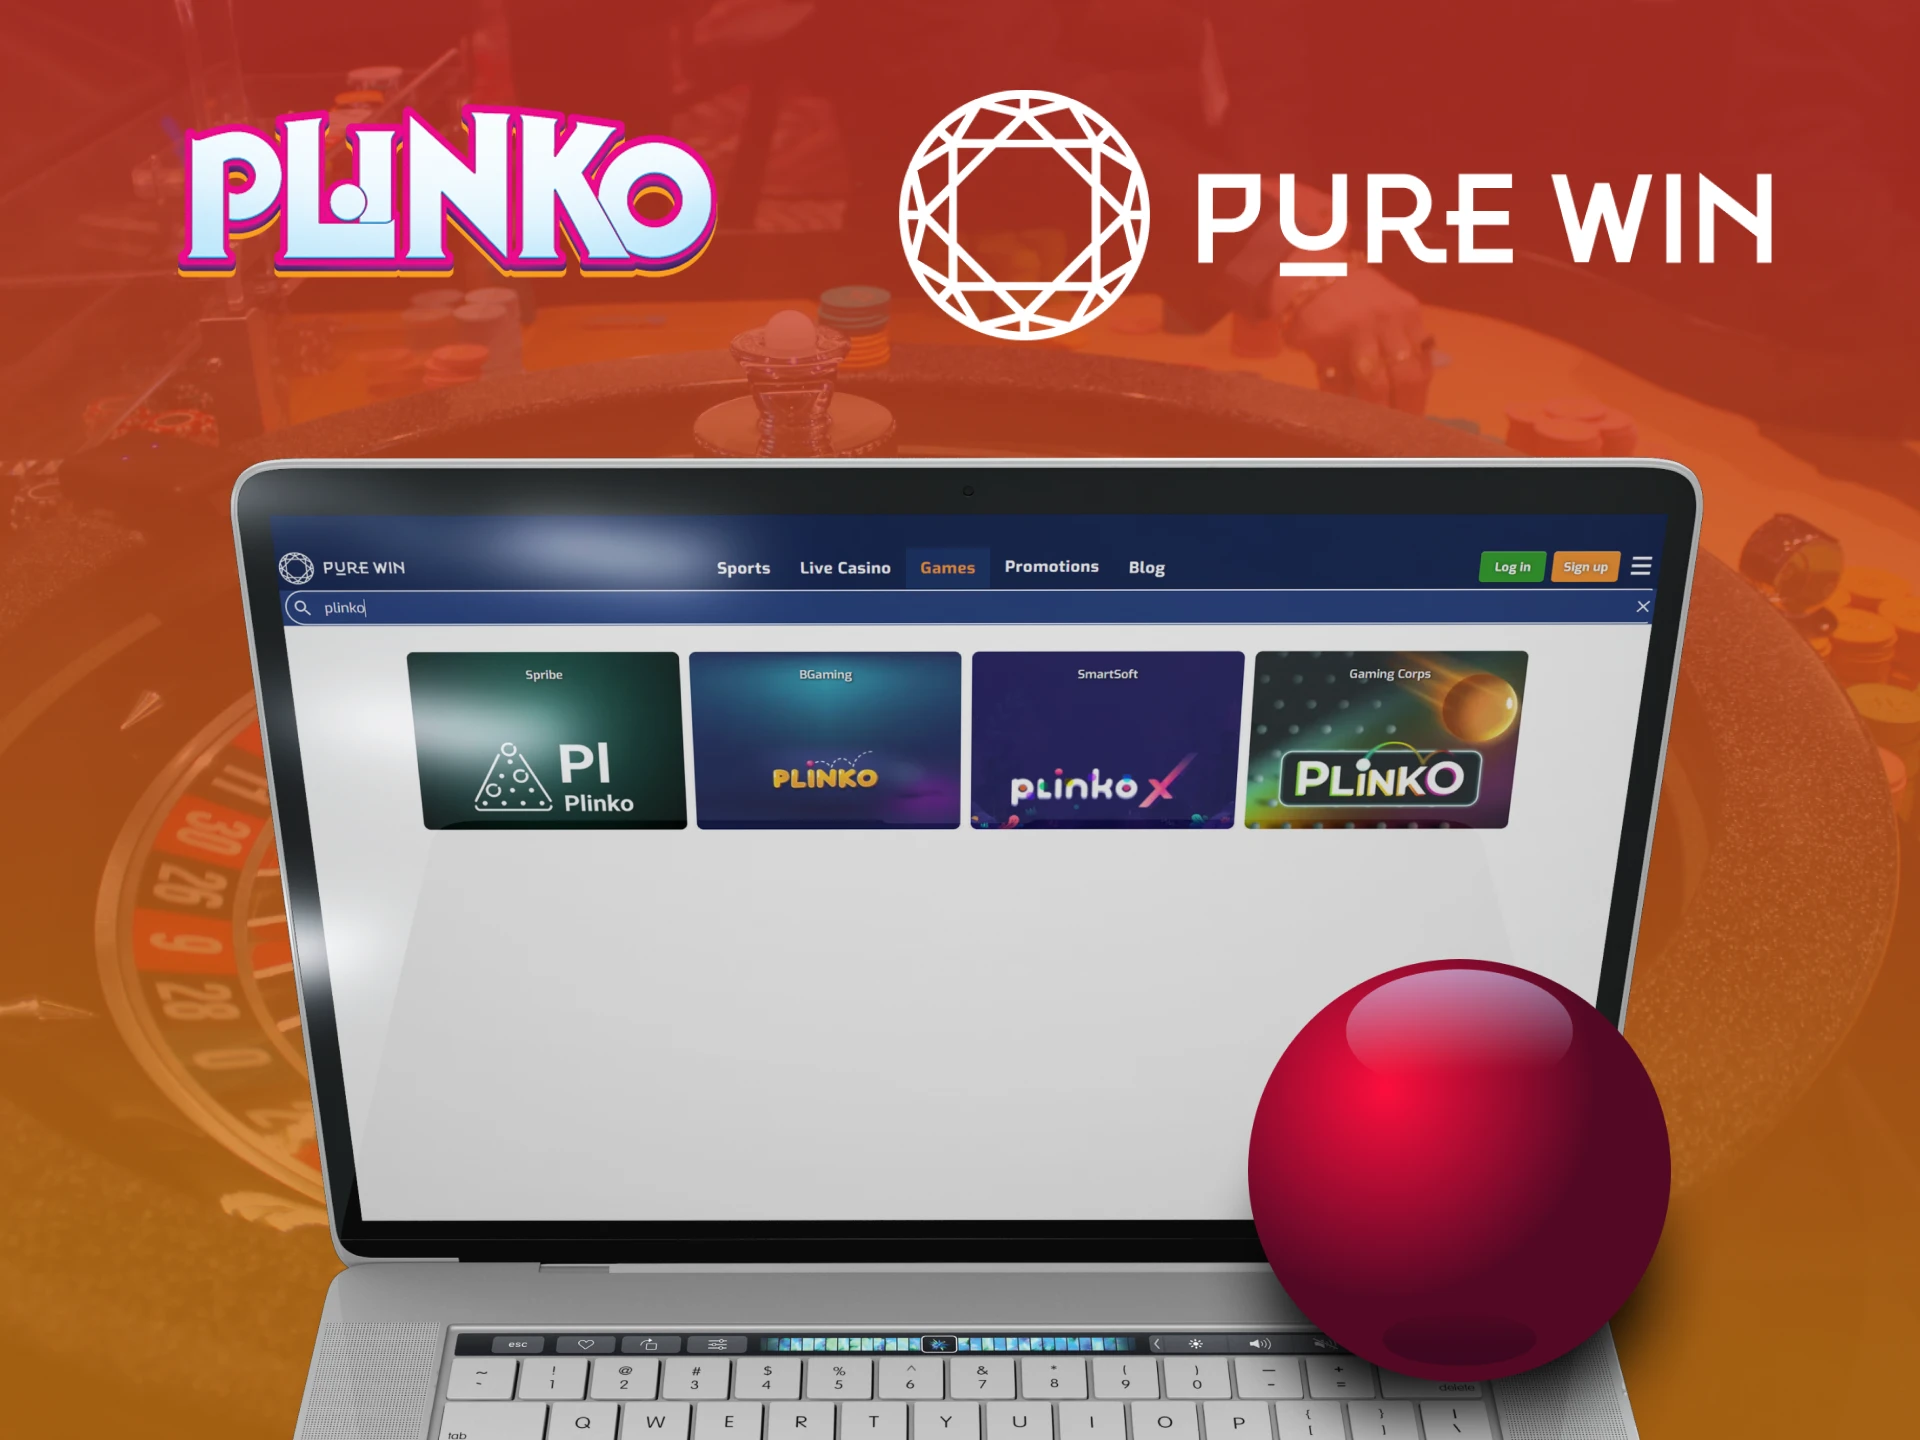 Play Plinko on the PureWin website.